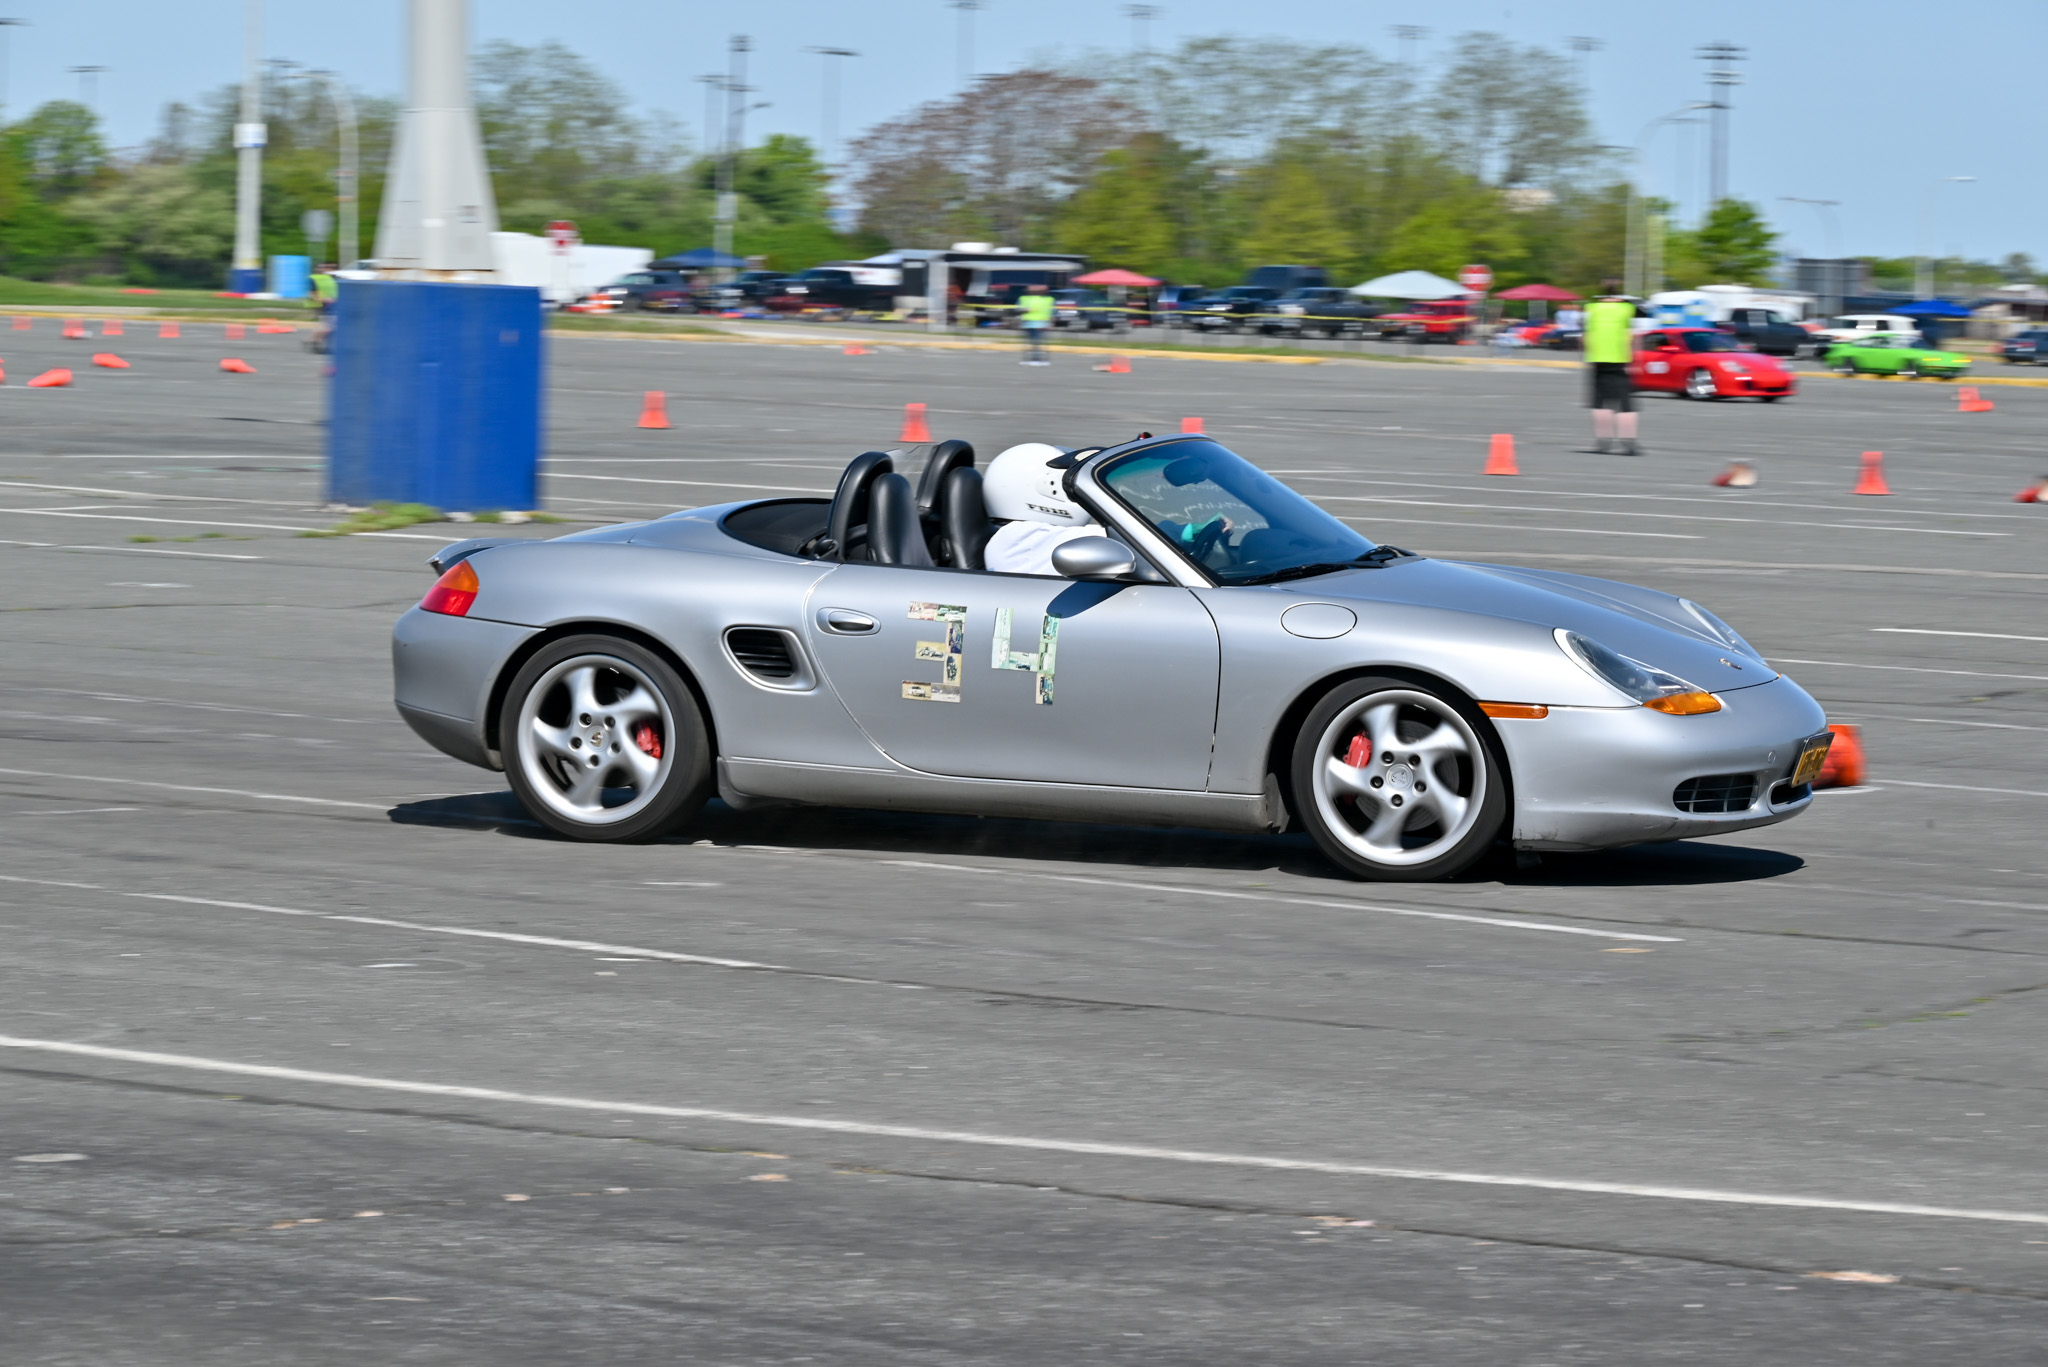 Porsche Club of America Event - Metro NY Region Autocross